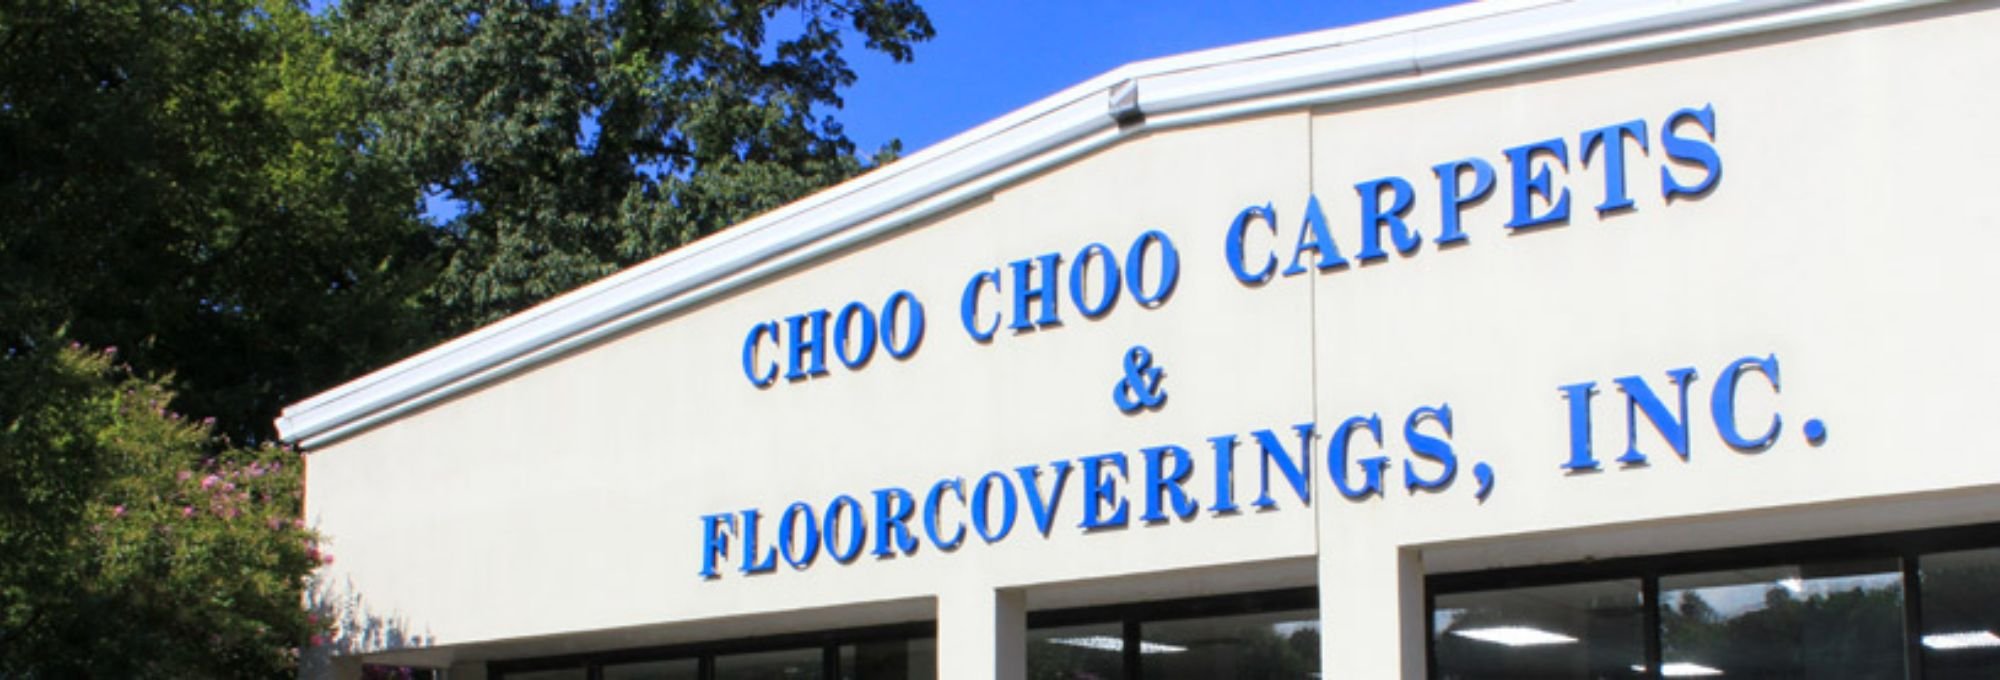 Showroom Choo Choo Carpets & Floor Coverings, Inc in Lane Chattanooga, TN